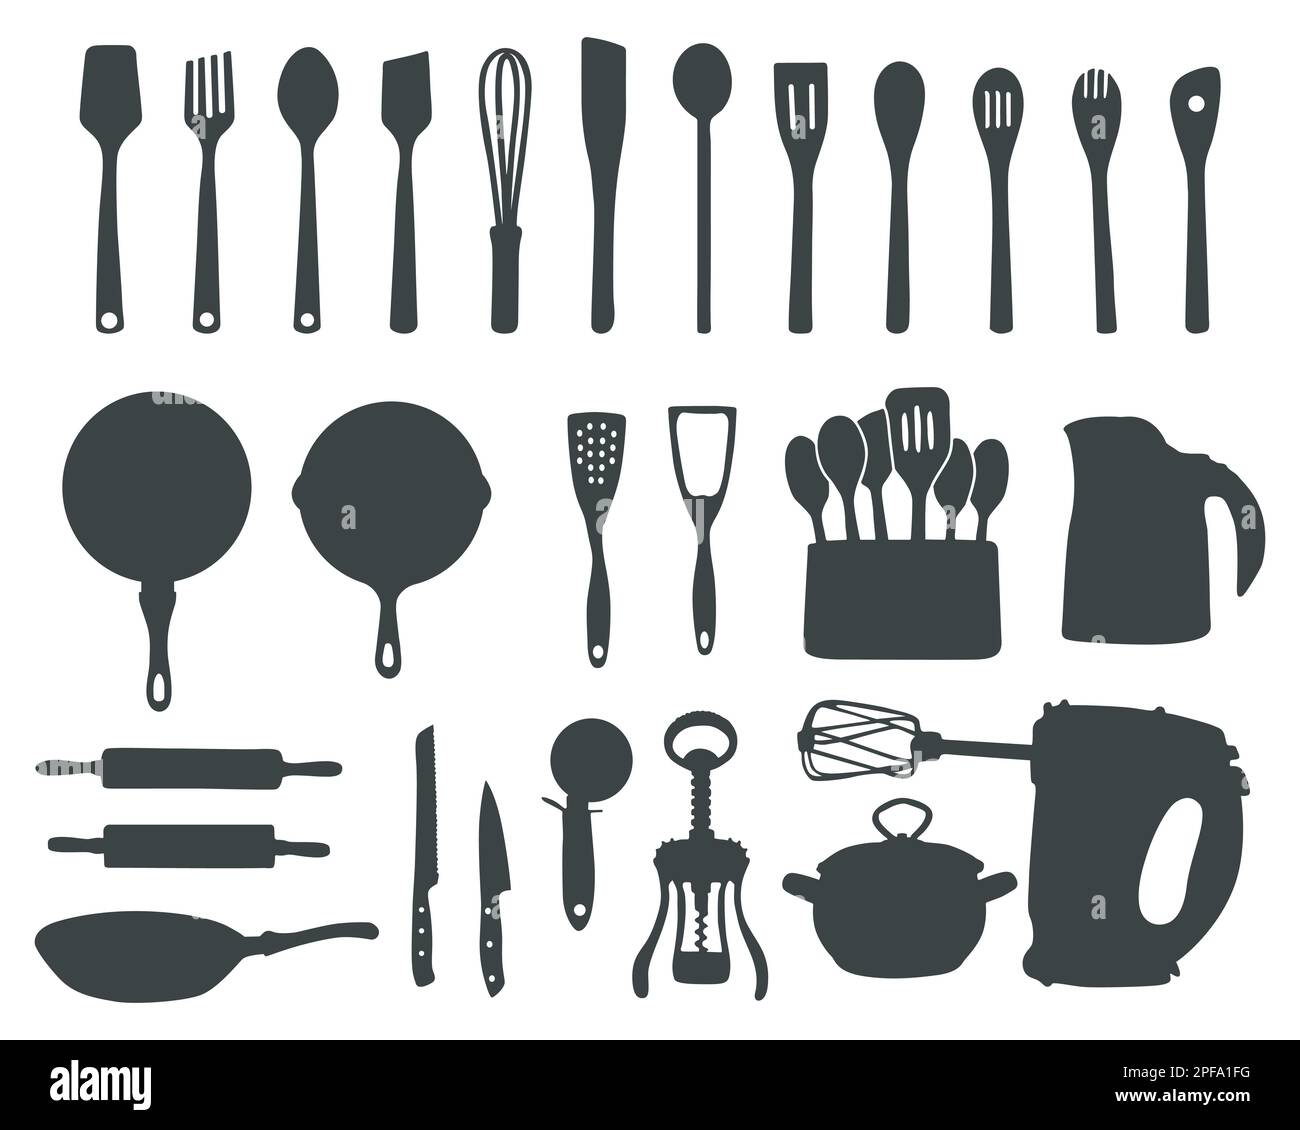 https://c8.alamy.com/compes/2pfa1fg/herramientas-de-cocina-silueta-utensilios-de-cocina-silueta-herramientas-de-cocina-svg-2pfa1fg.jpg